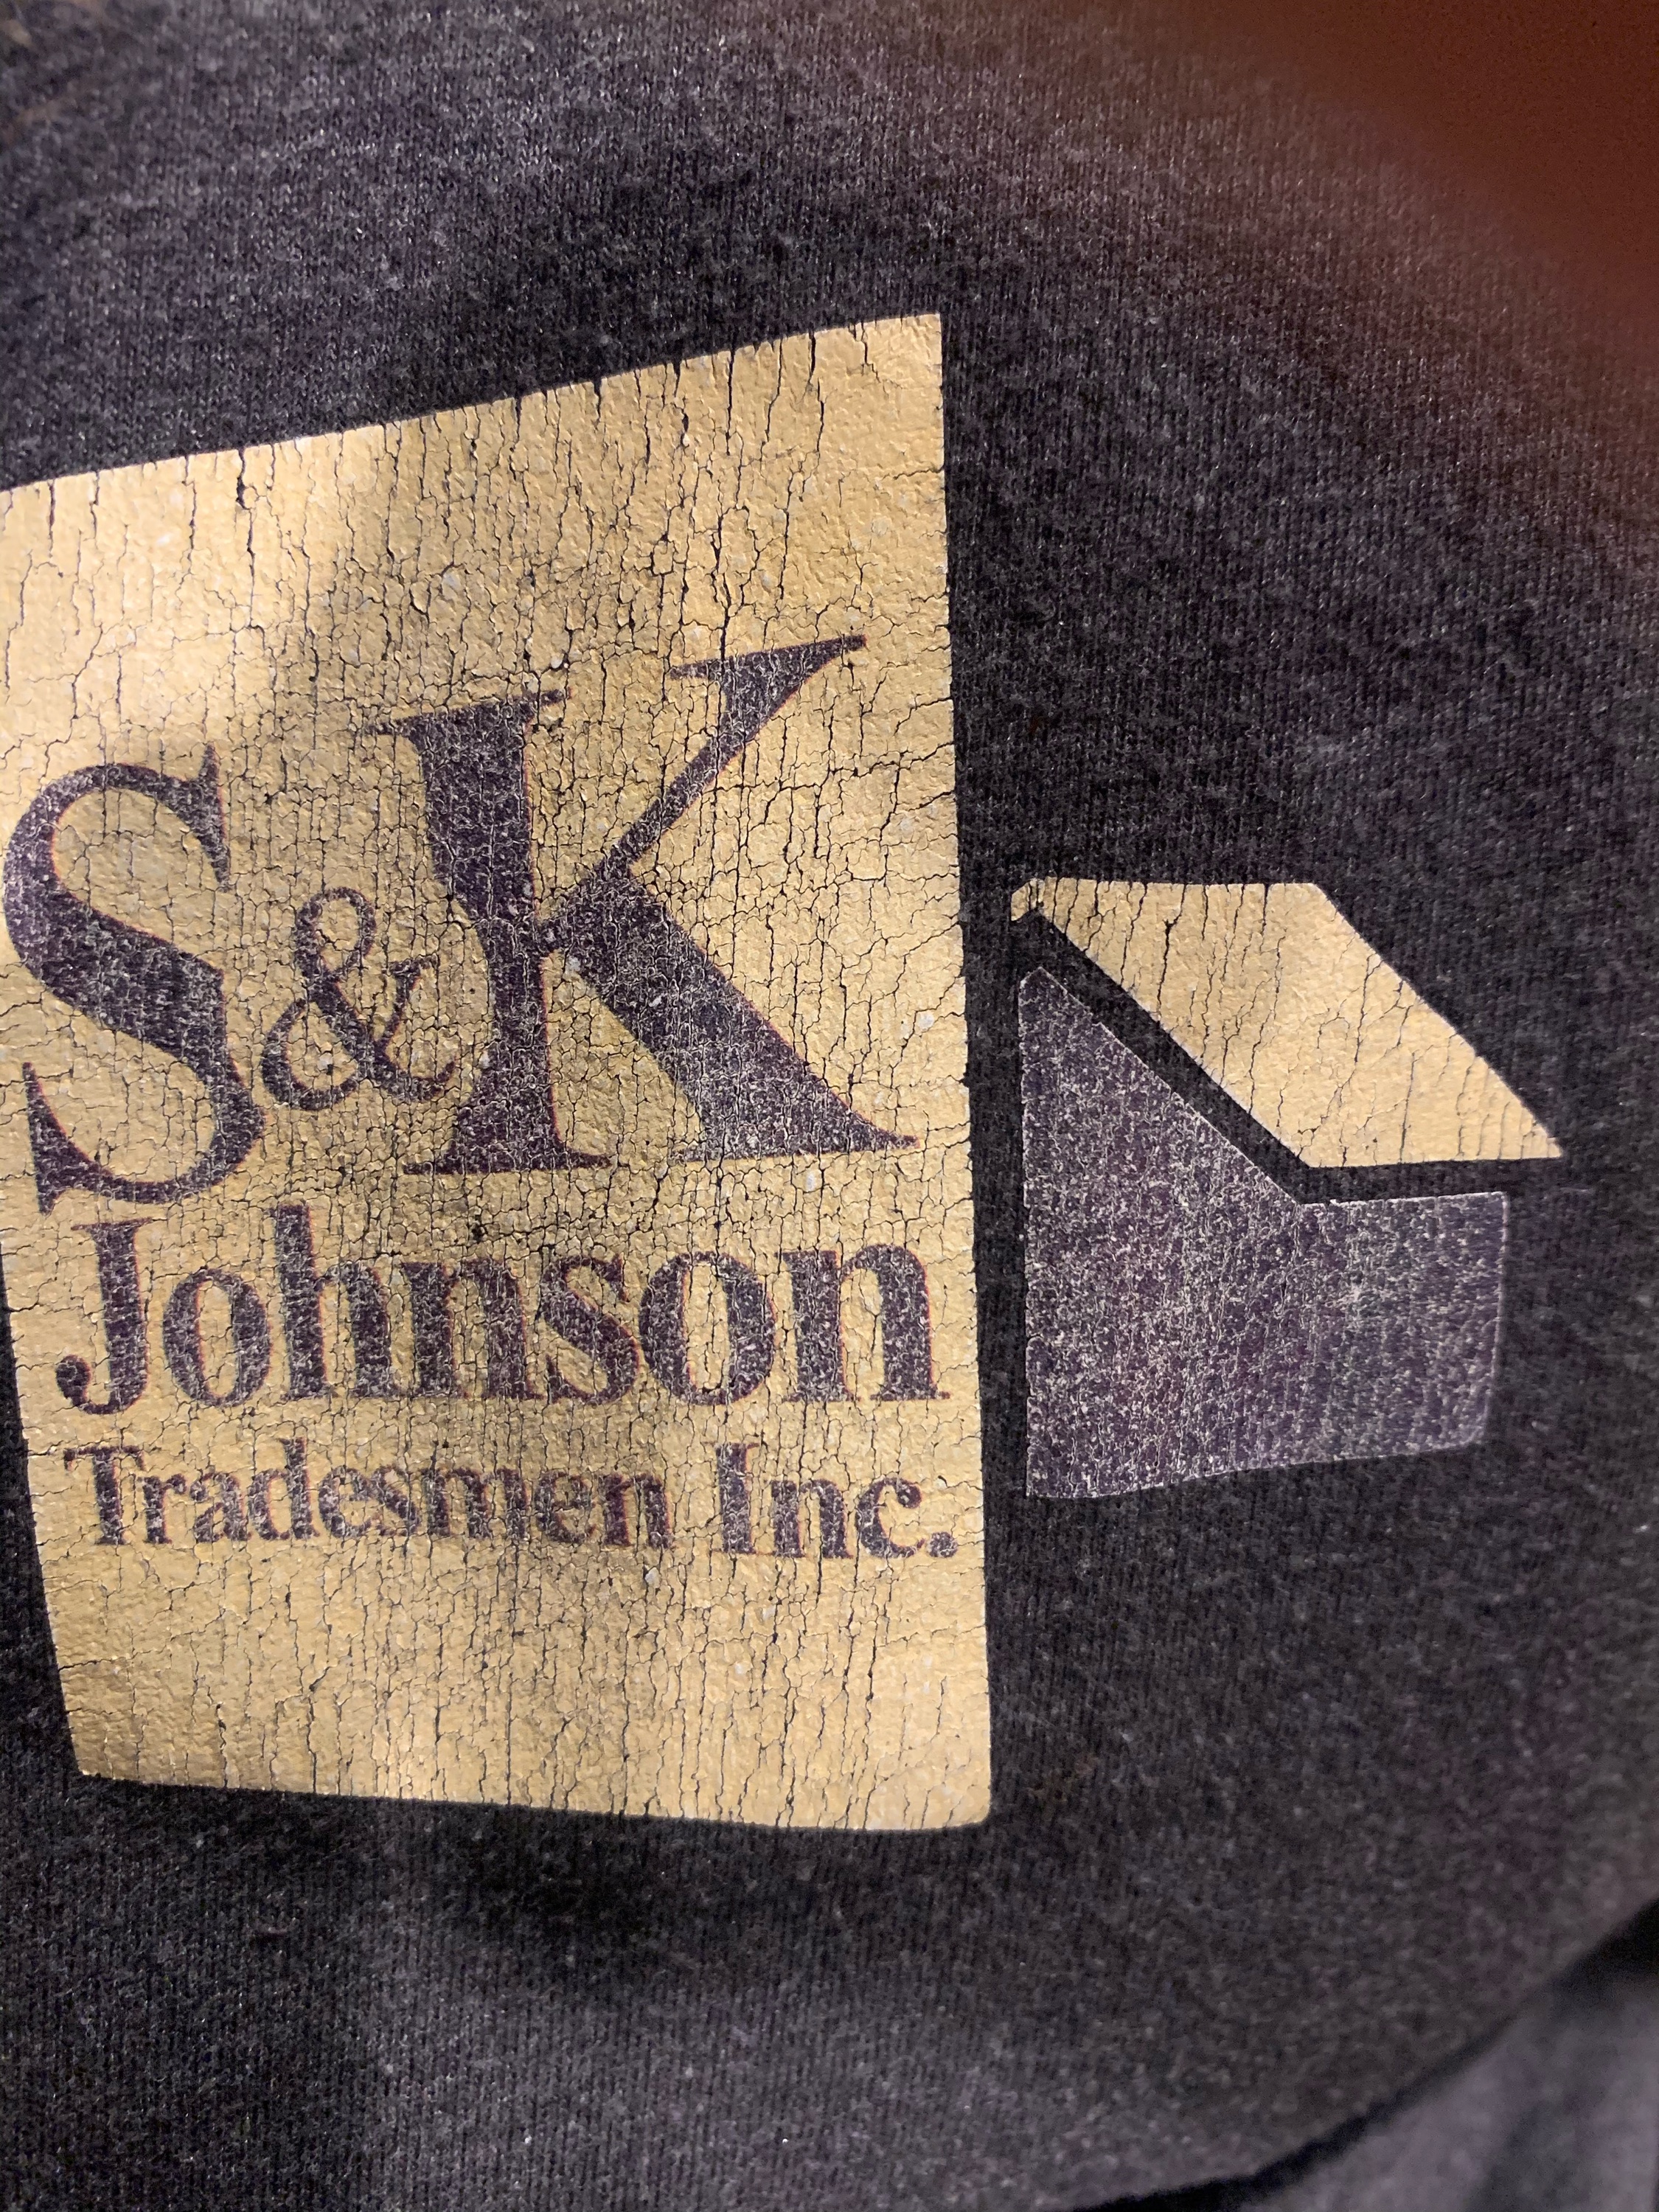 S & K Johnson Tradesman, Inc. Logo